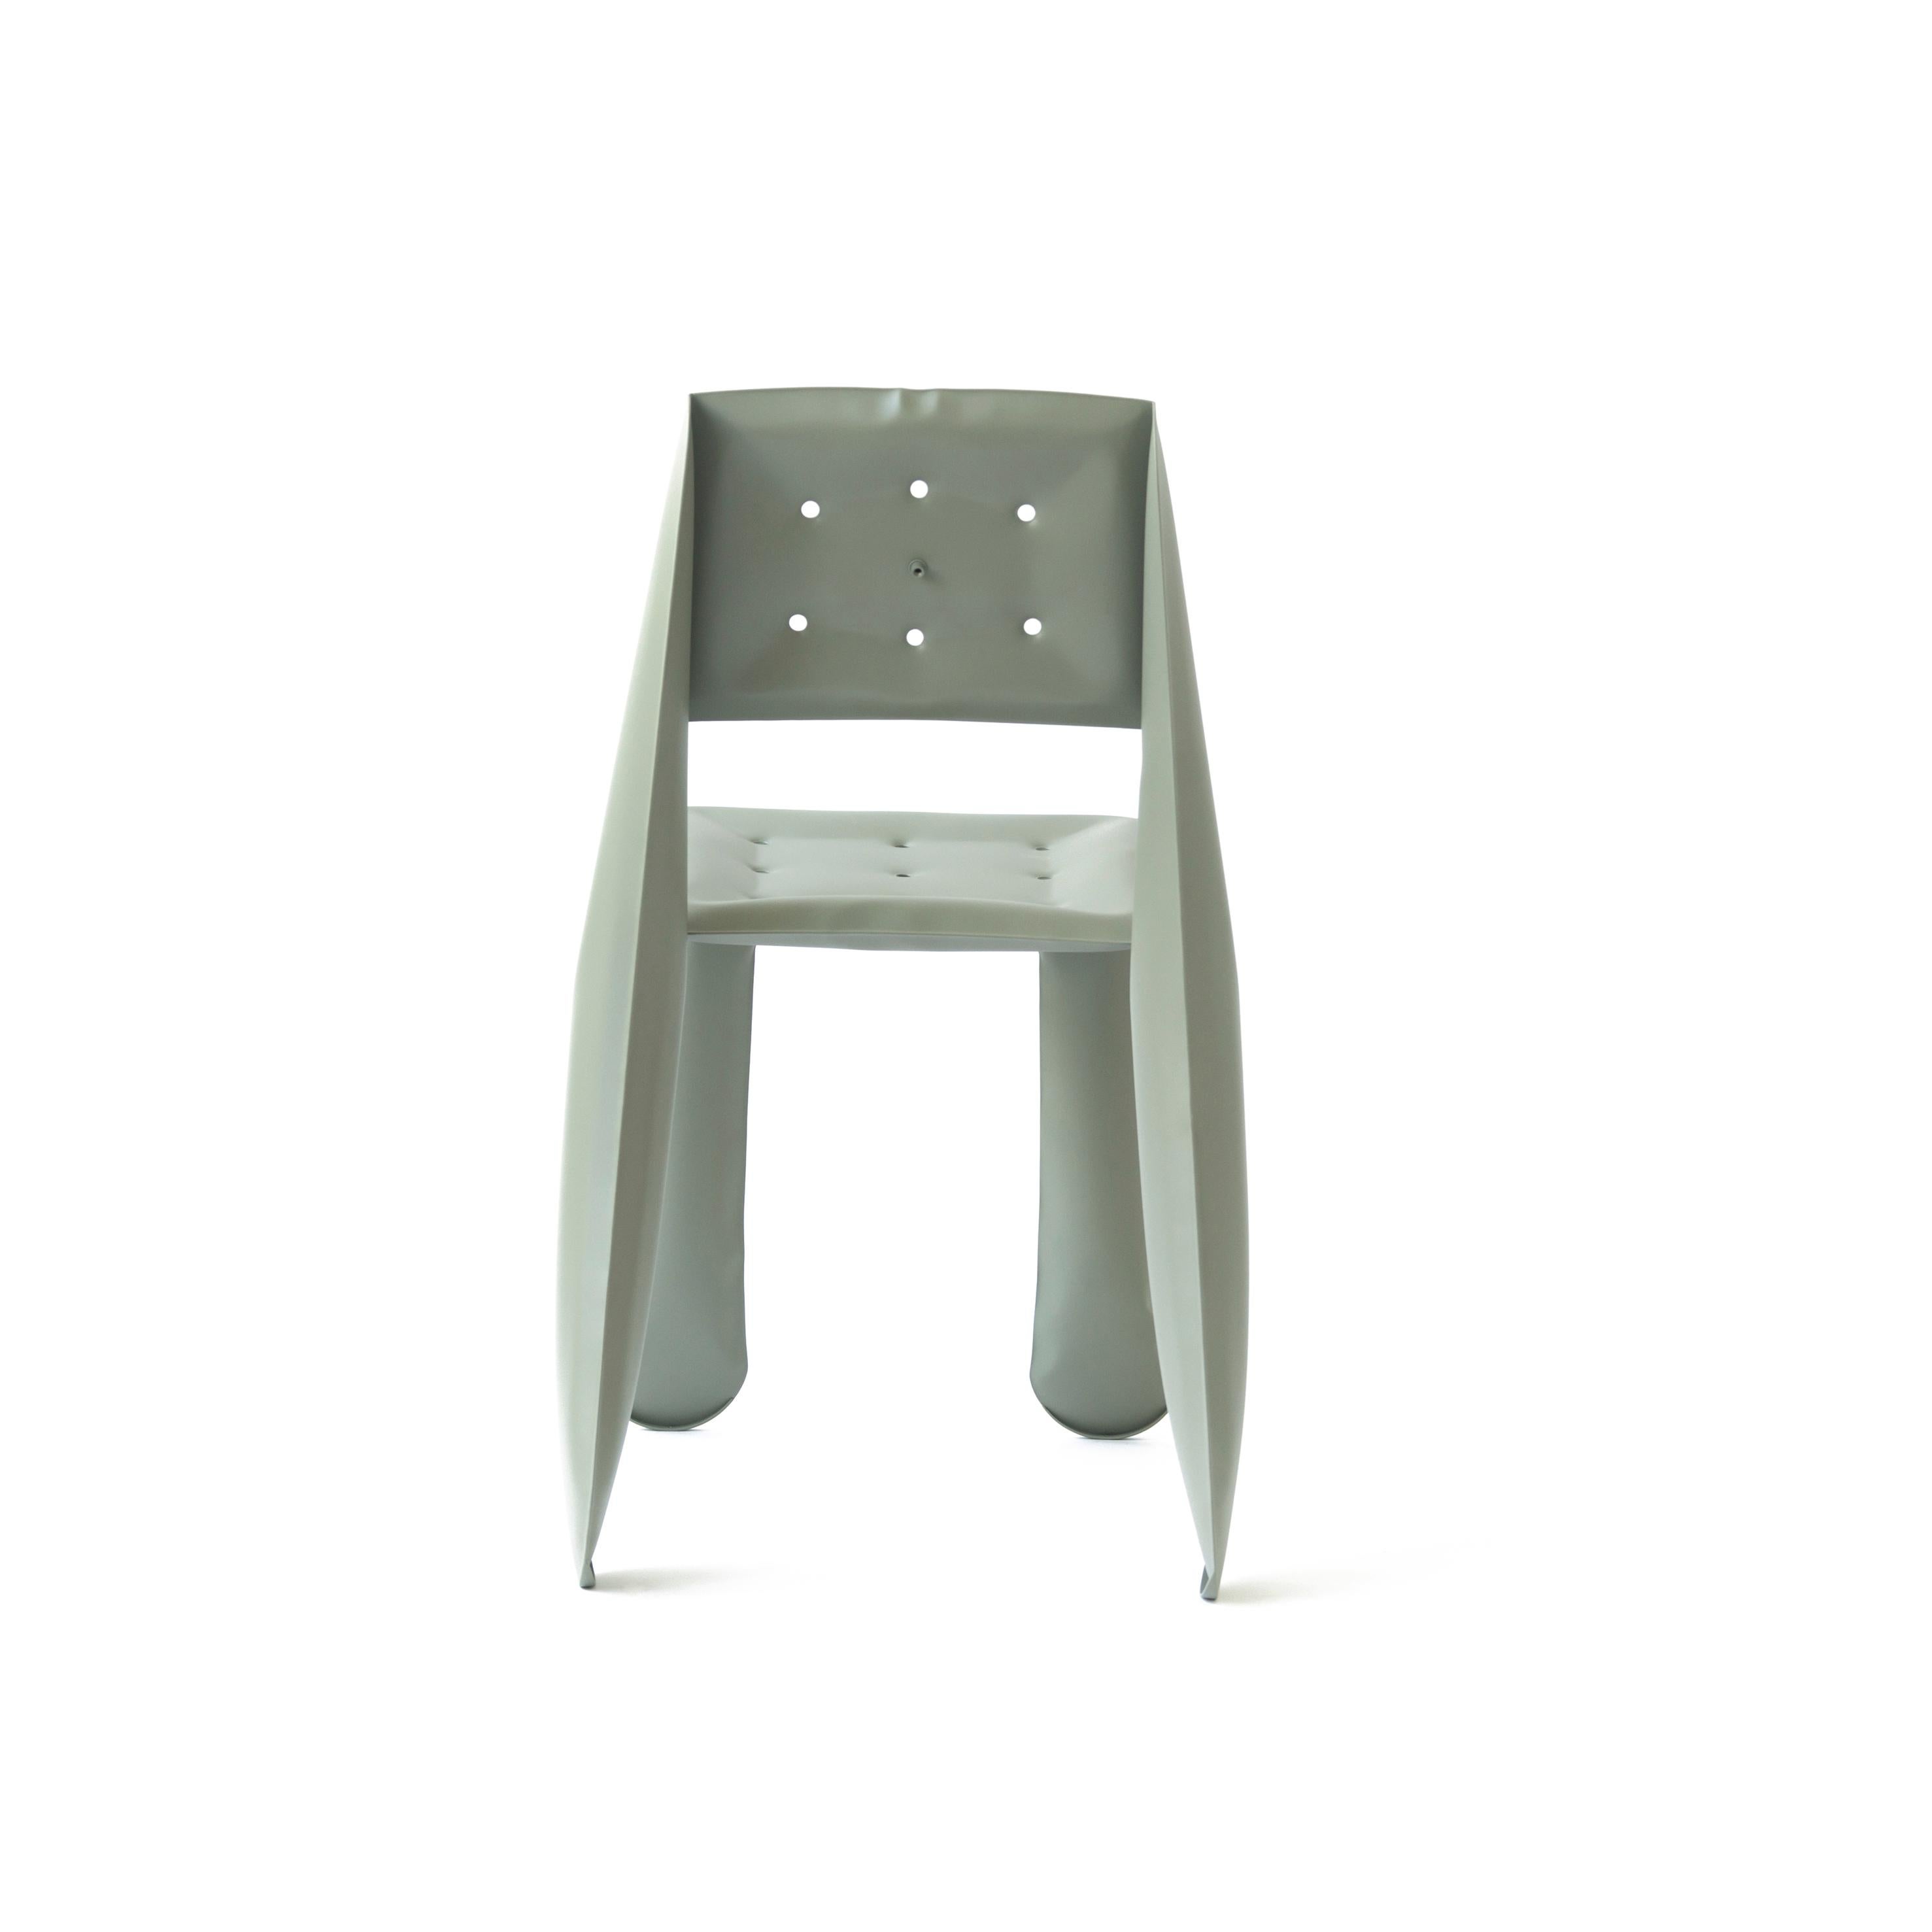 Polish Moss Grey Aluminum Chippensteel 0.5 Sculptural Chair by Zieta For Sale